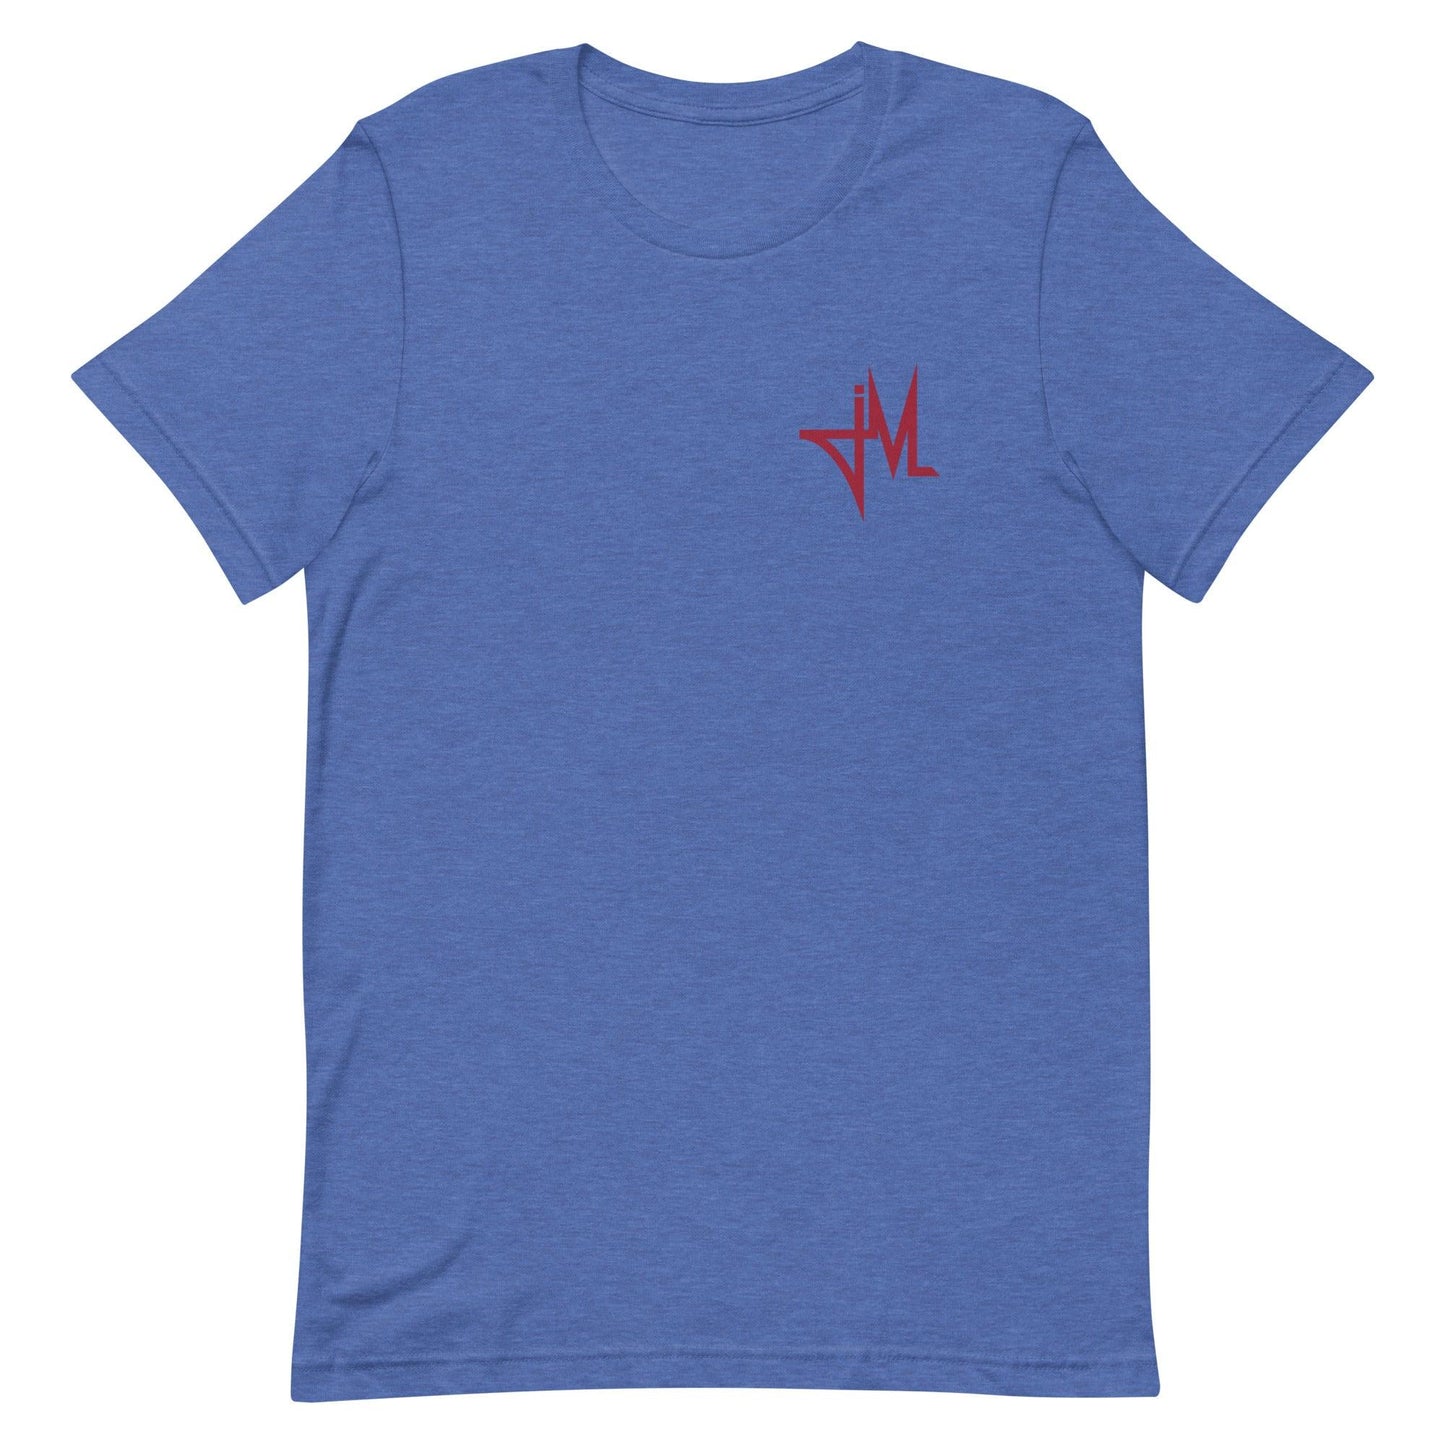 Jabe Mullins "Signature" t-shirt - Fan Arch